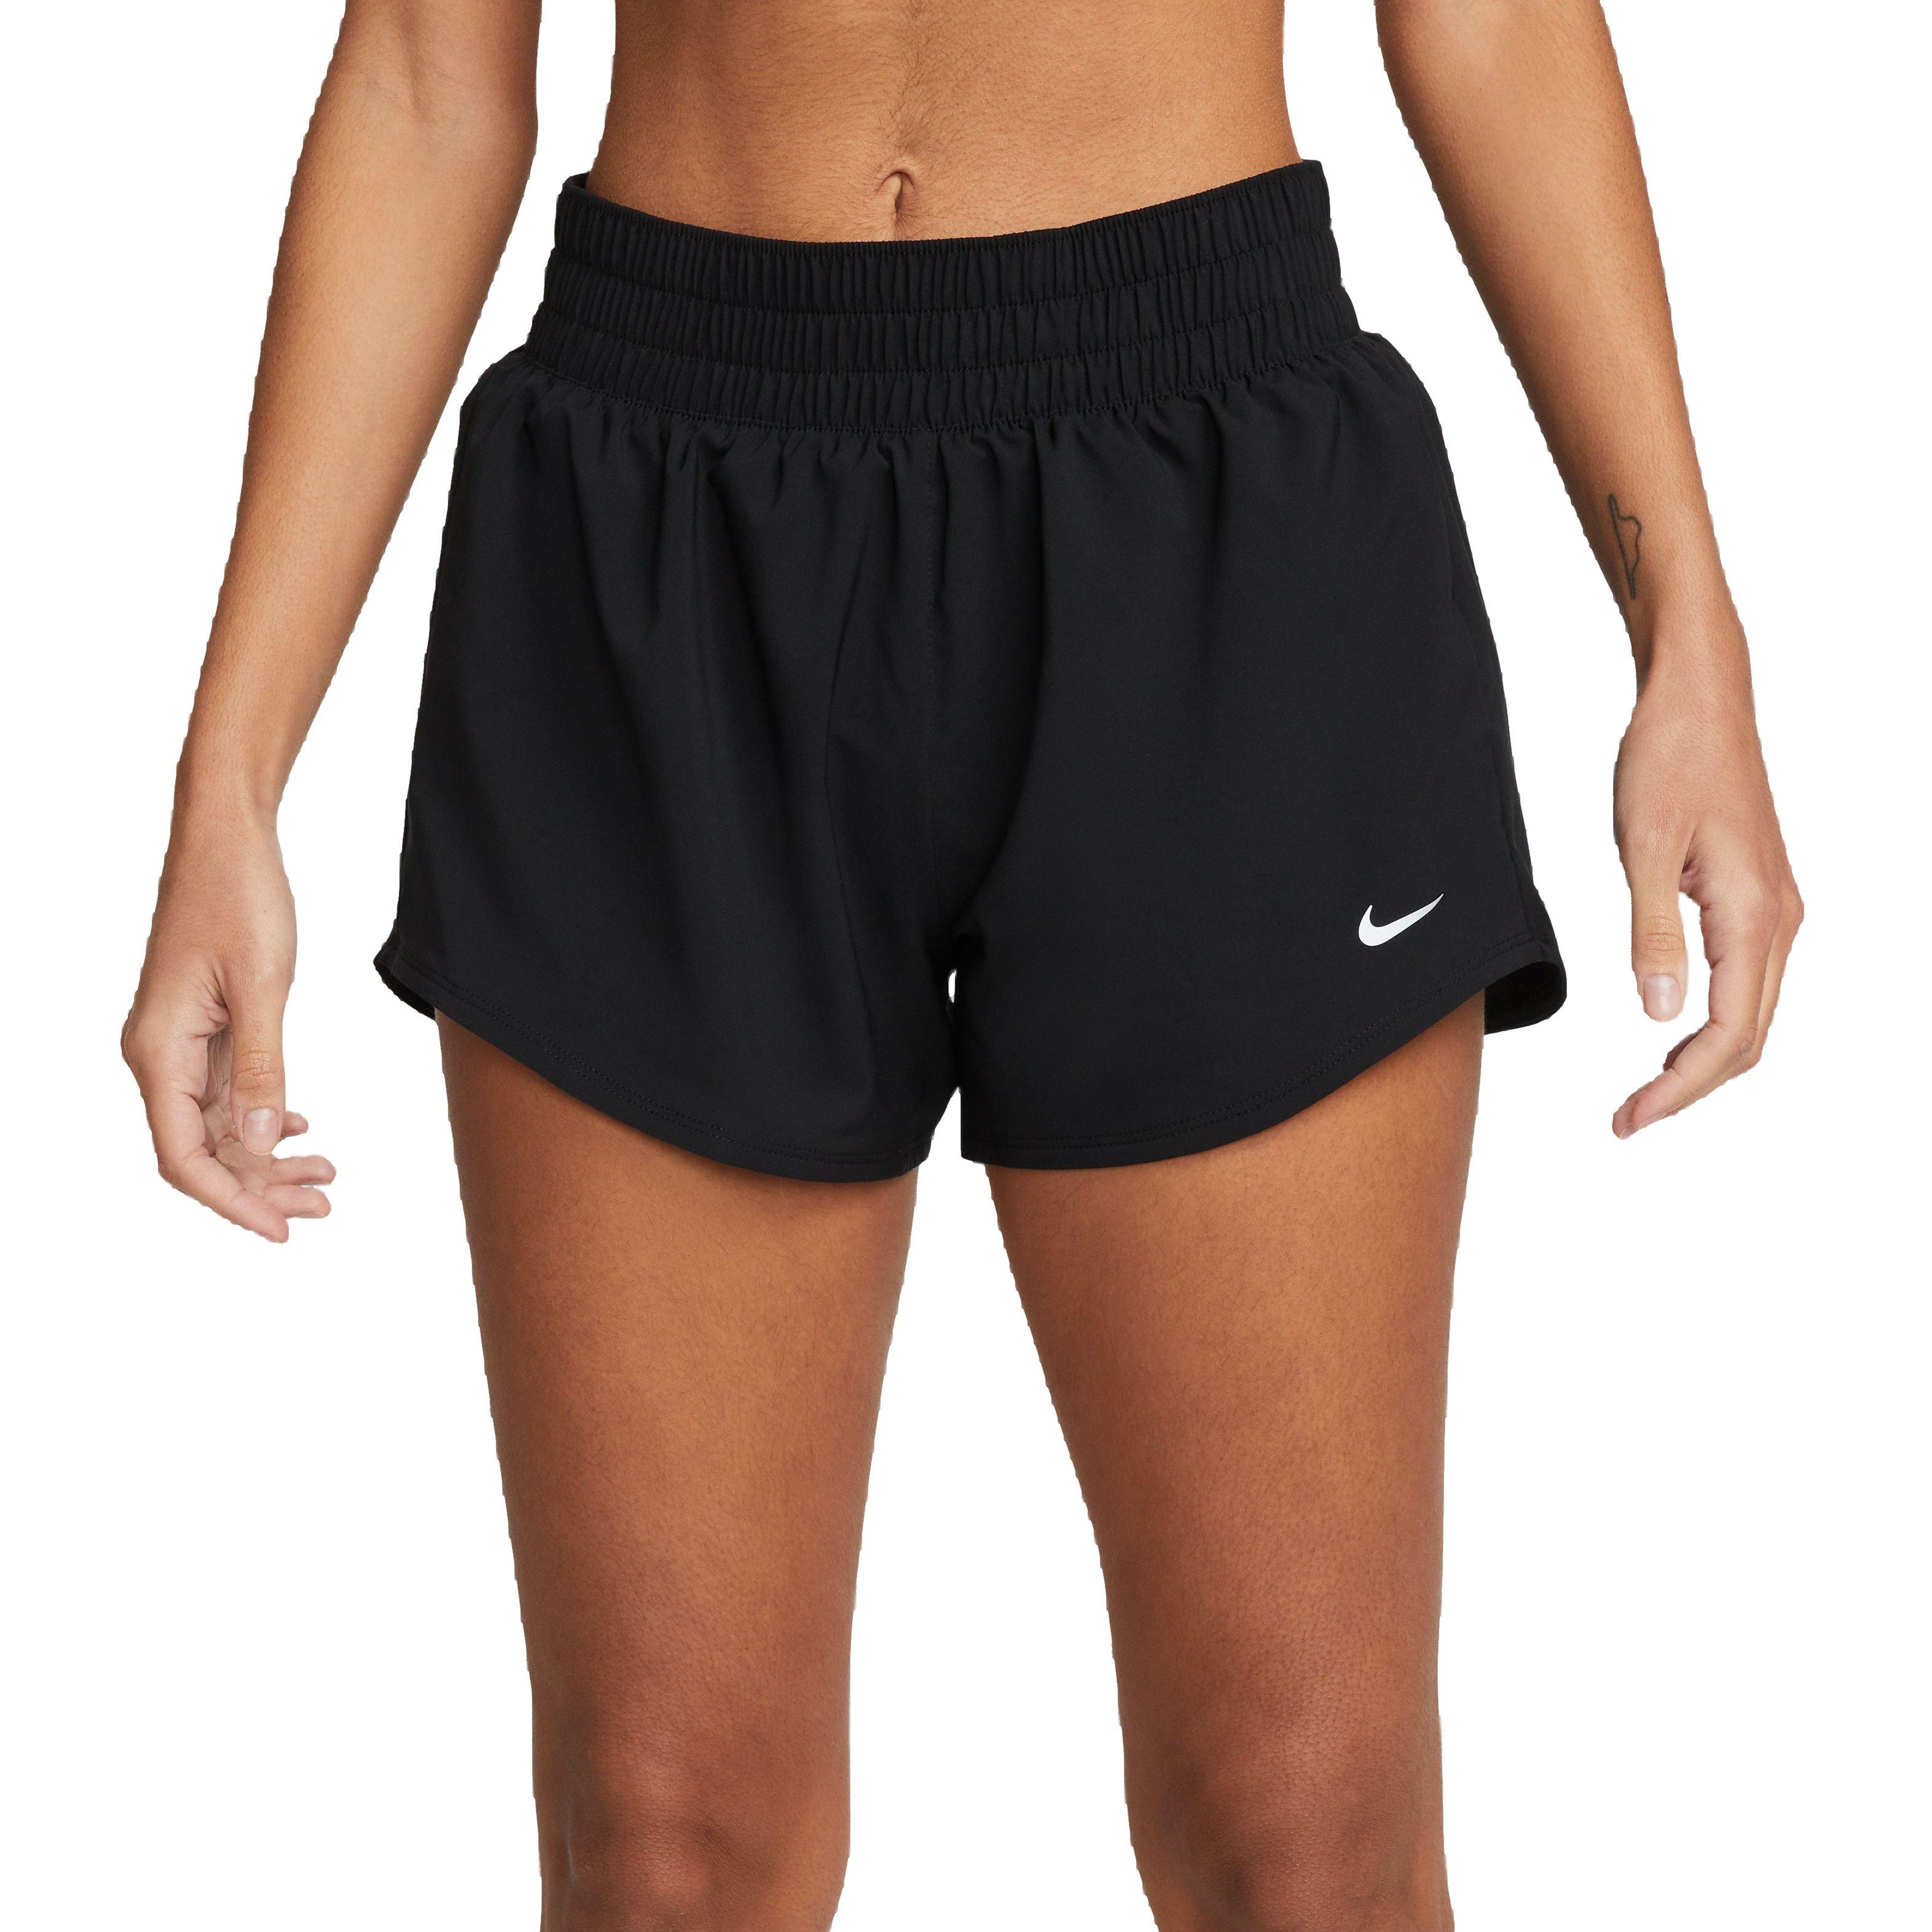 Nike Women's One Dri-FIT Mid-Rise Leggings - Hibbett